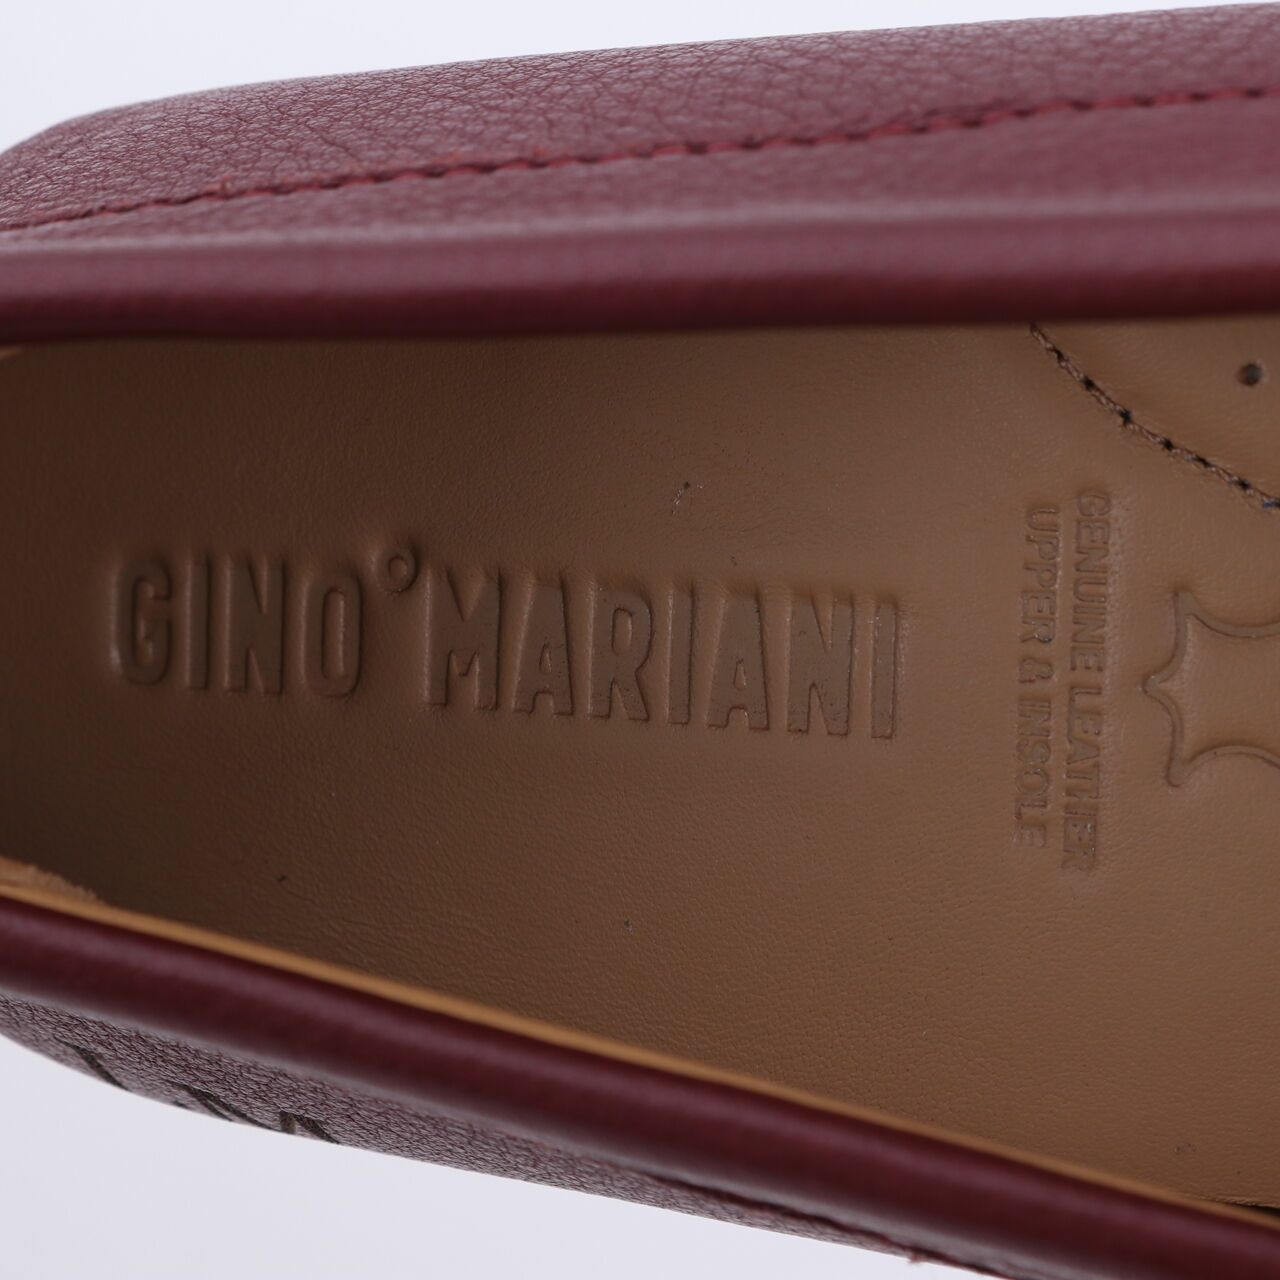 Ginomariani Pink & Maroon Flats